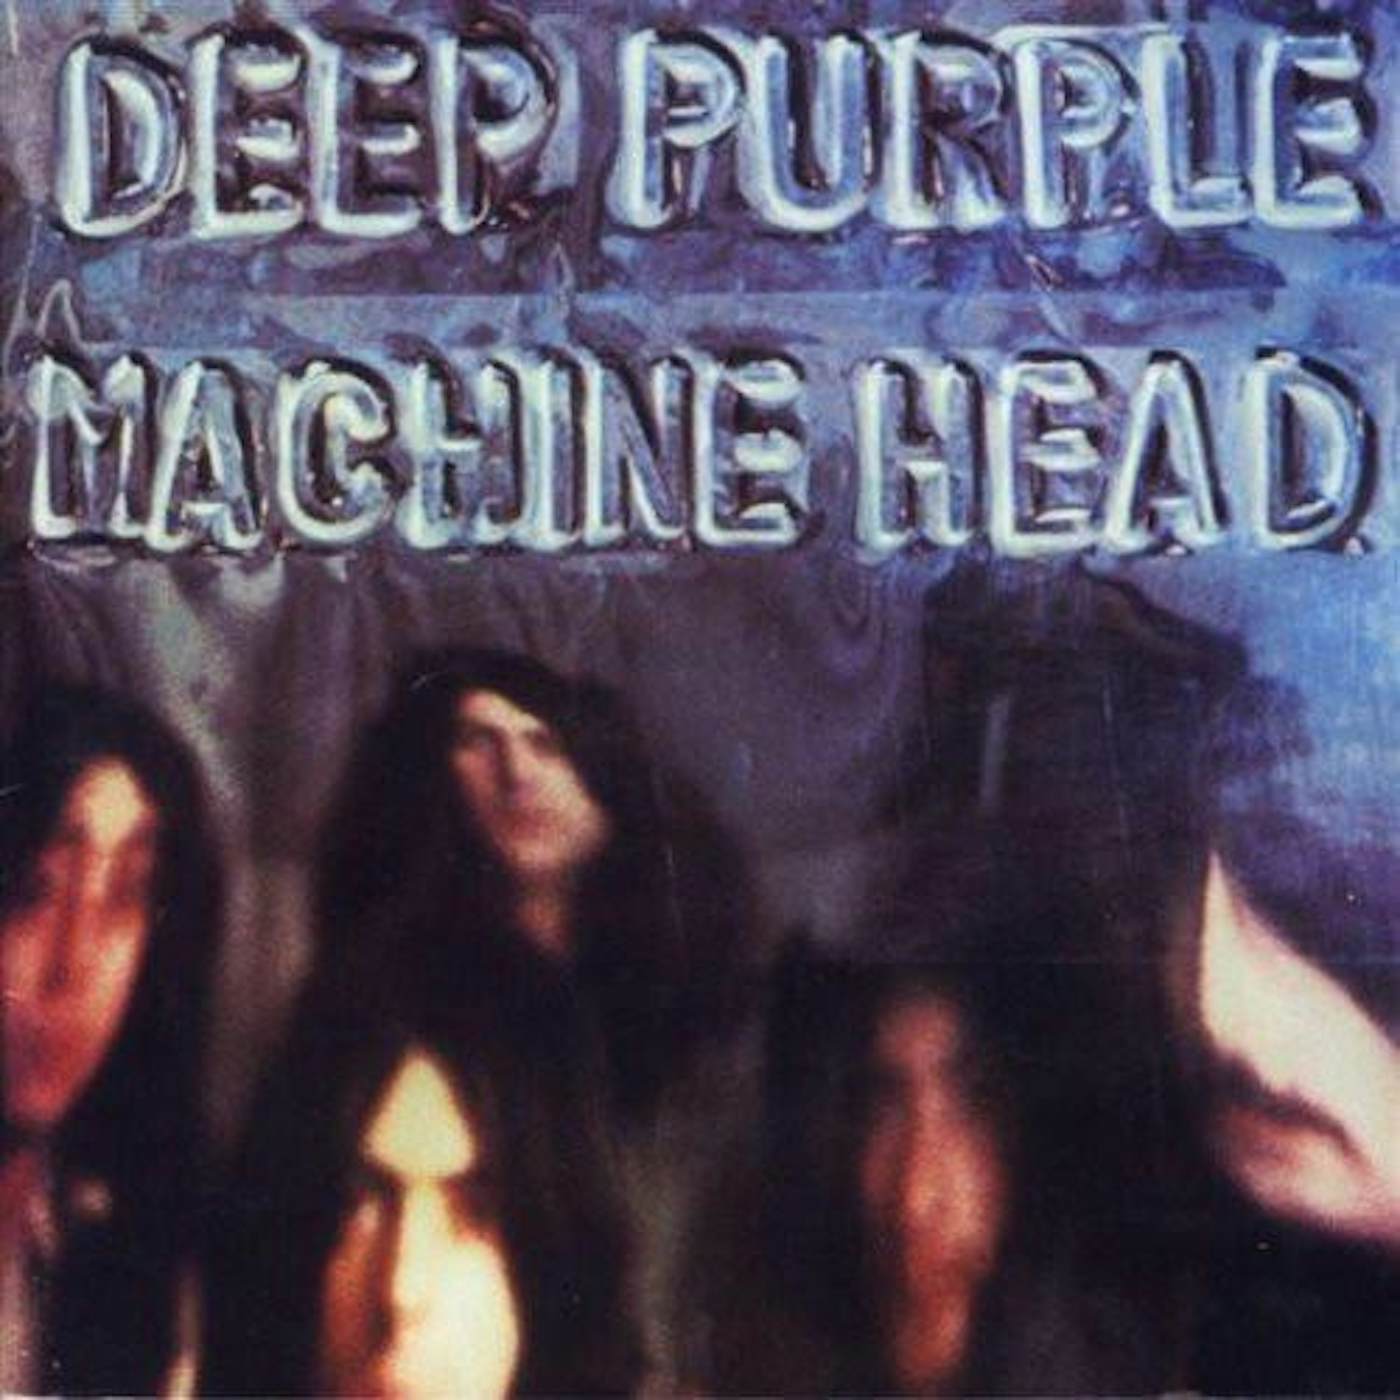 Deep Purple MACHINE HEAD CD